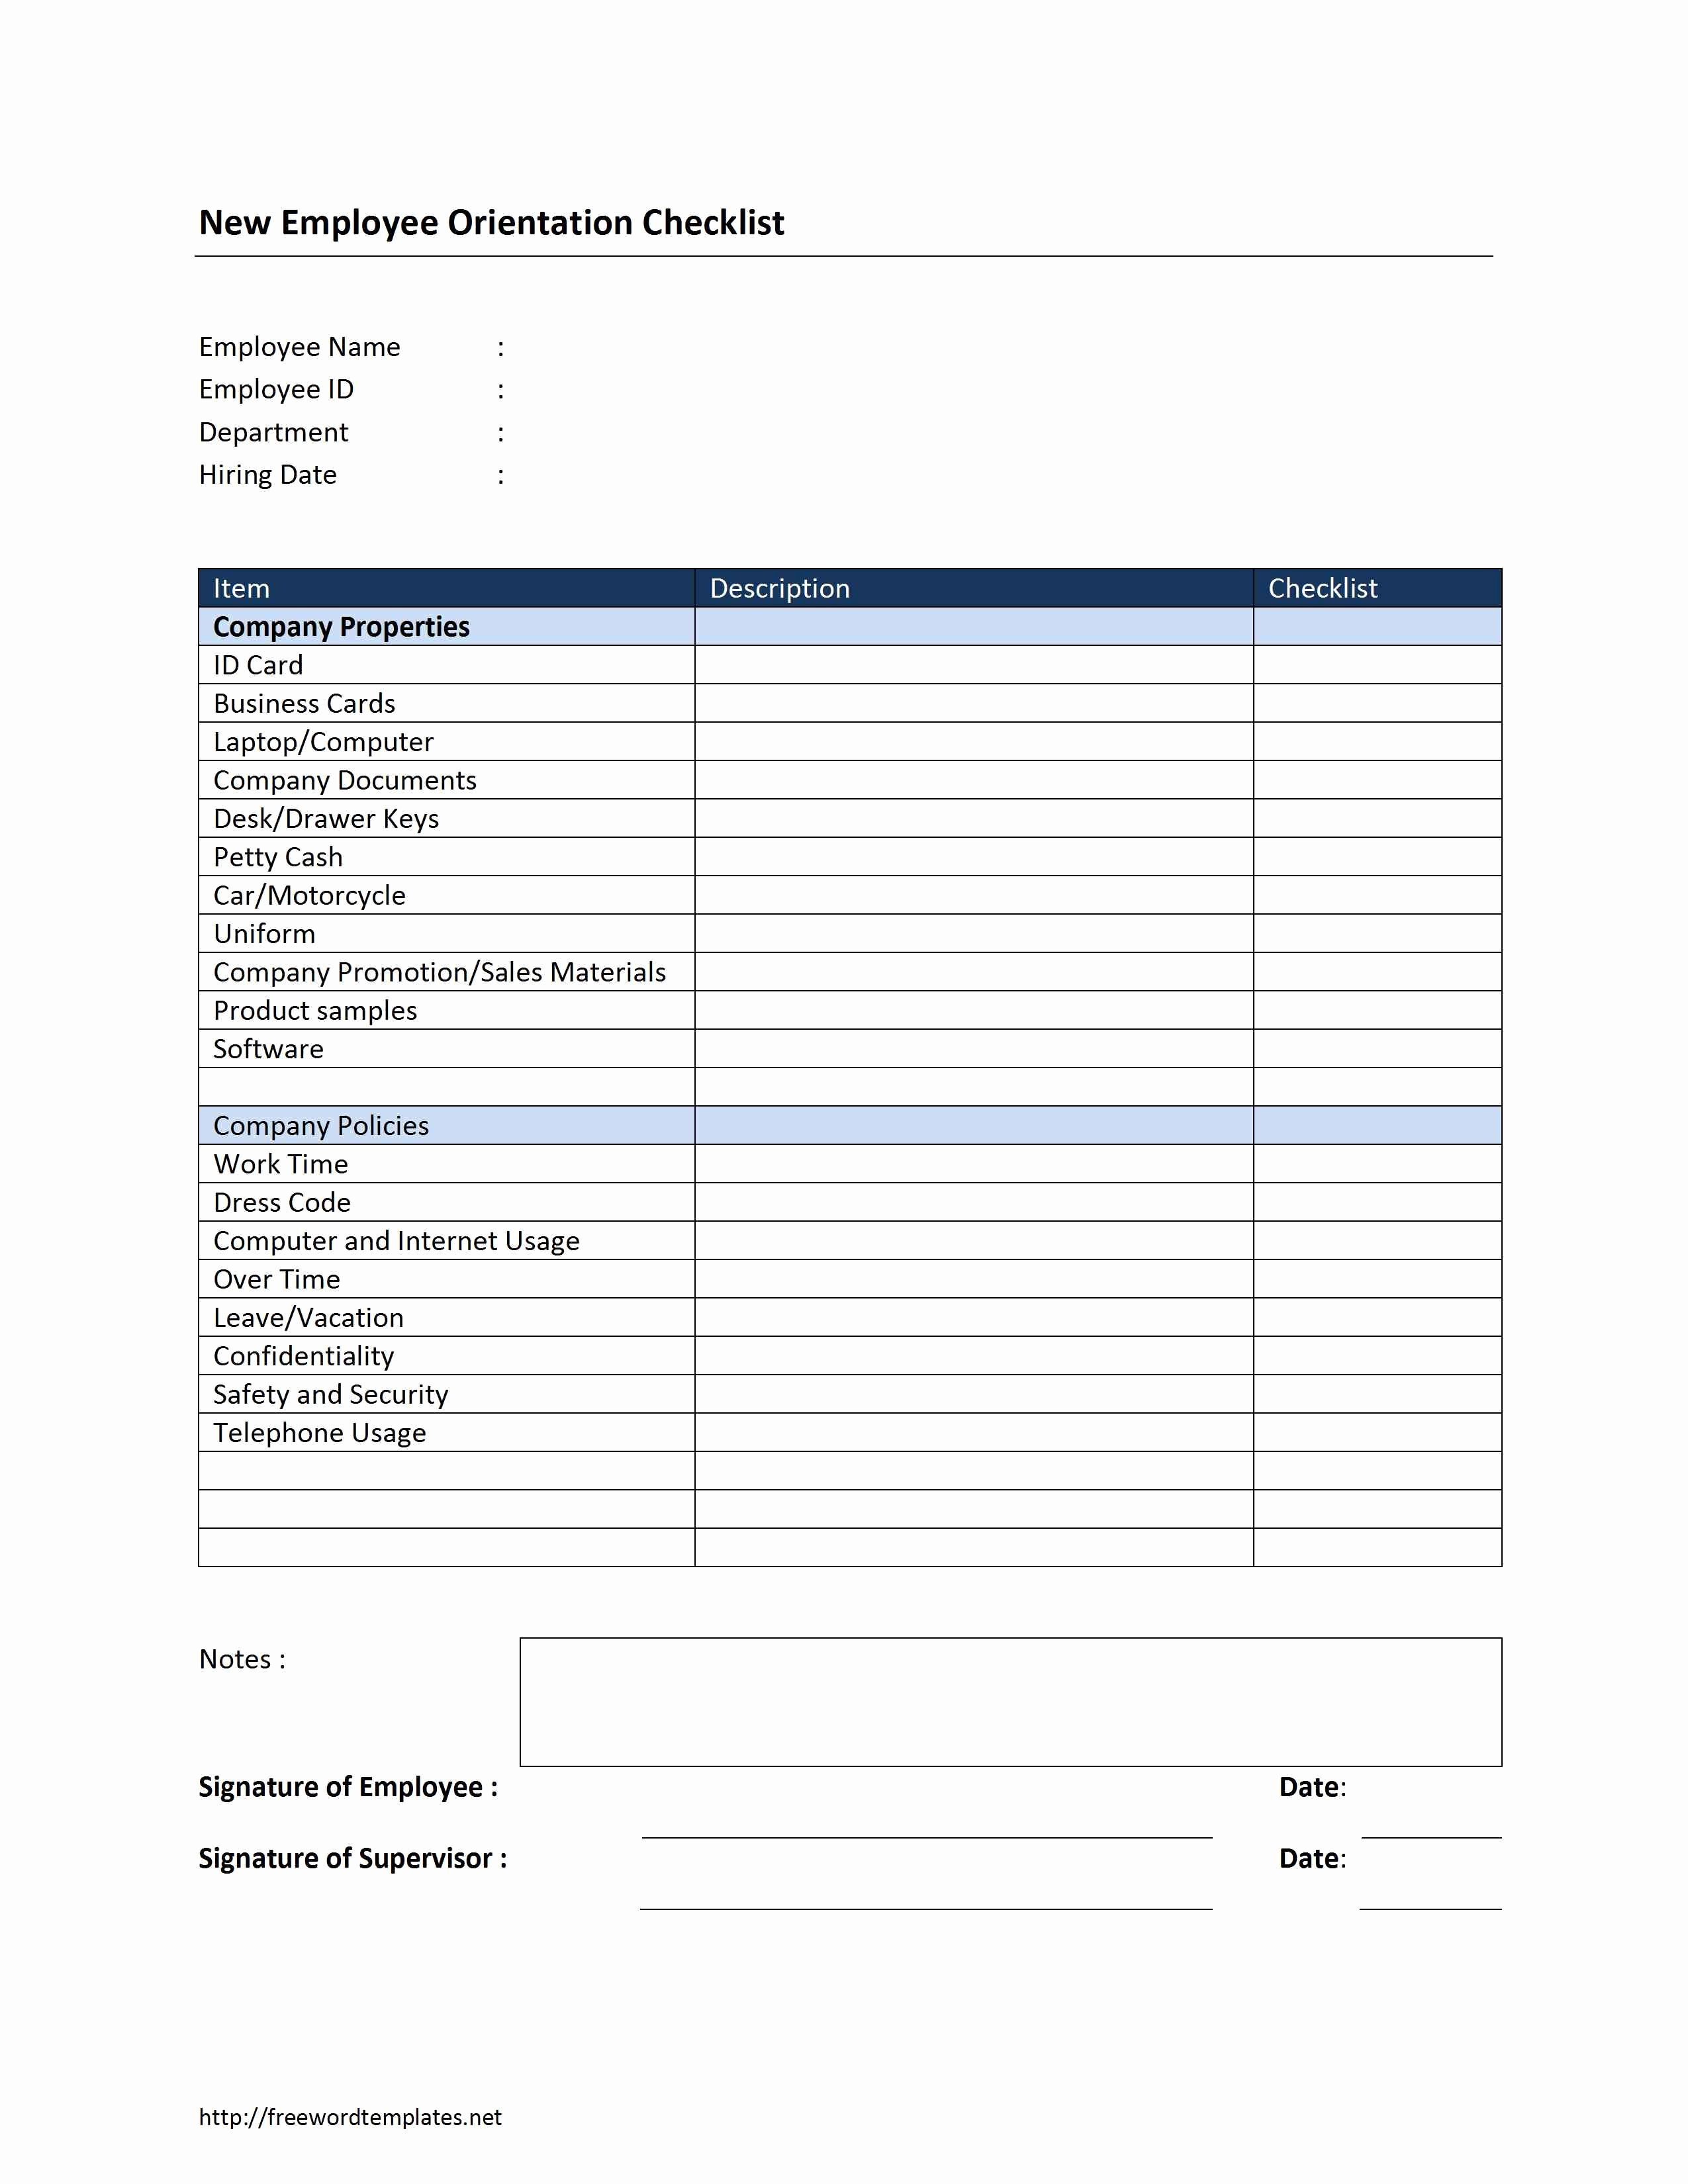 New Hire Checklist Template Word Luxury New Employee orientation Checklist Template